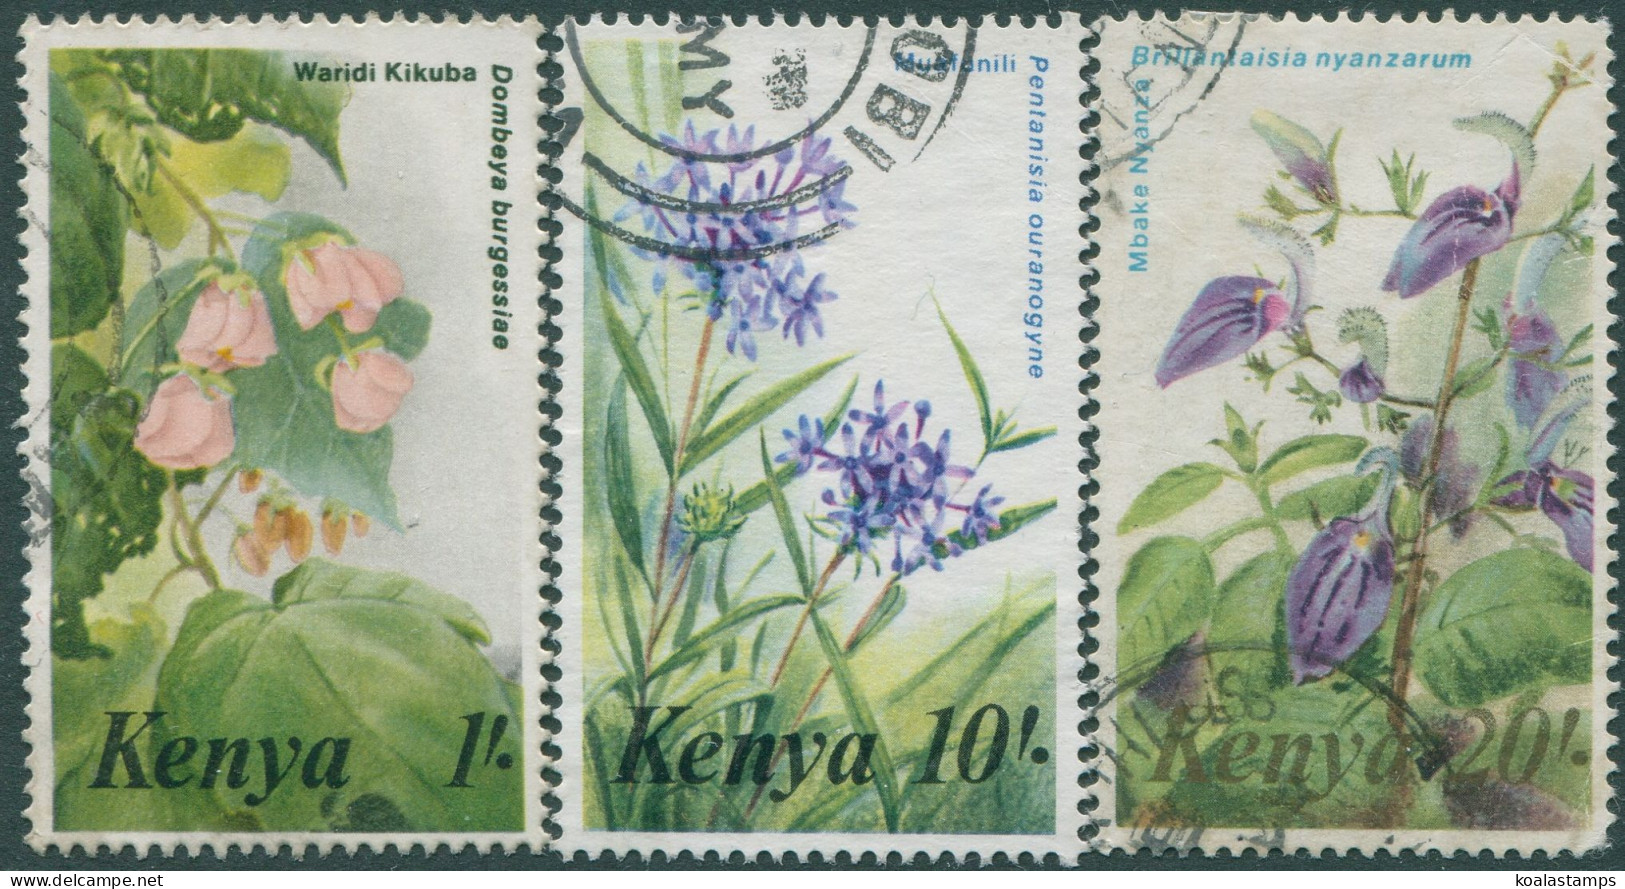 Kenya 1983 SG263-270 Flowers (3) FU - Kenya (1963-...)